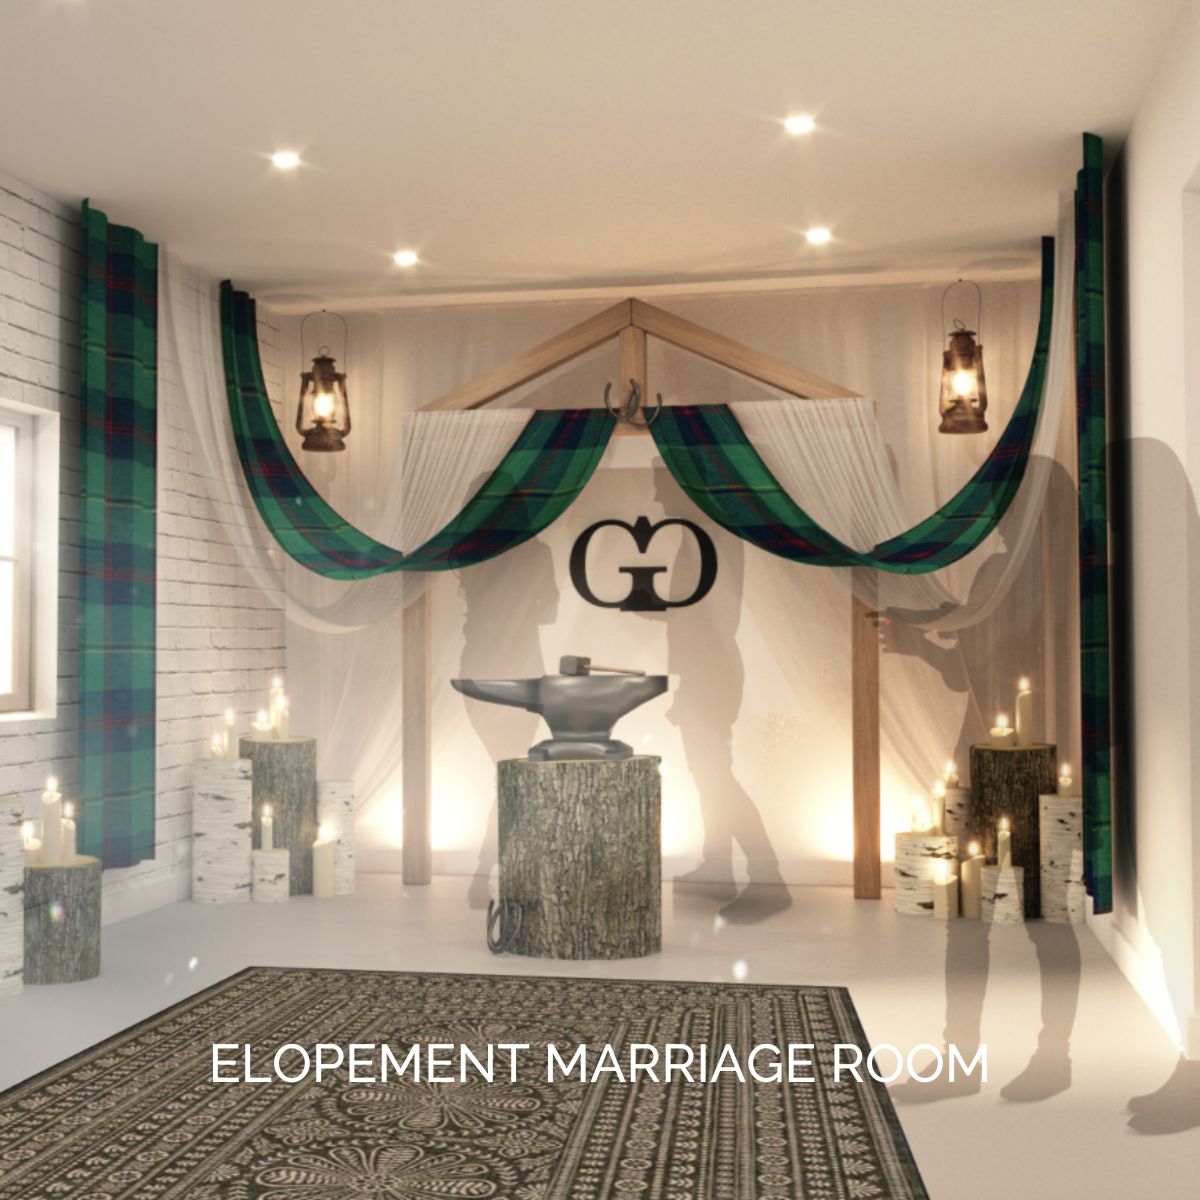 Elopement Marriage Room at Gretna Green Famous Blacksmiths Shop